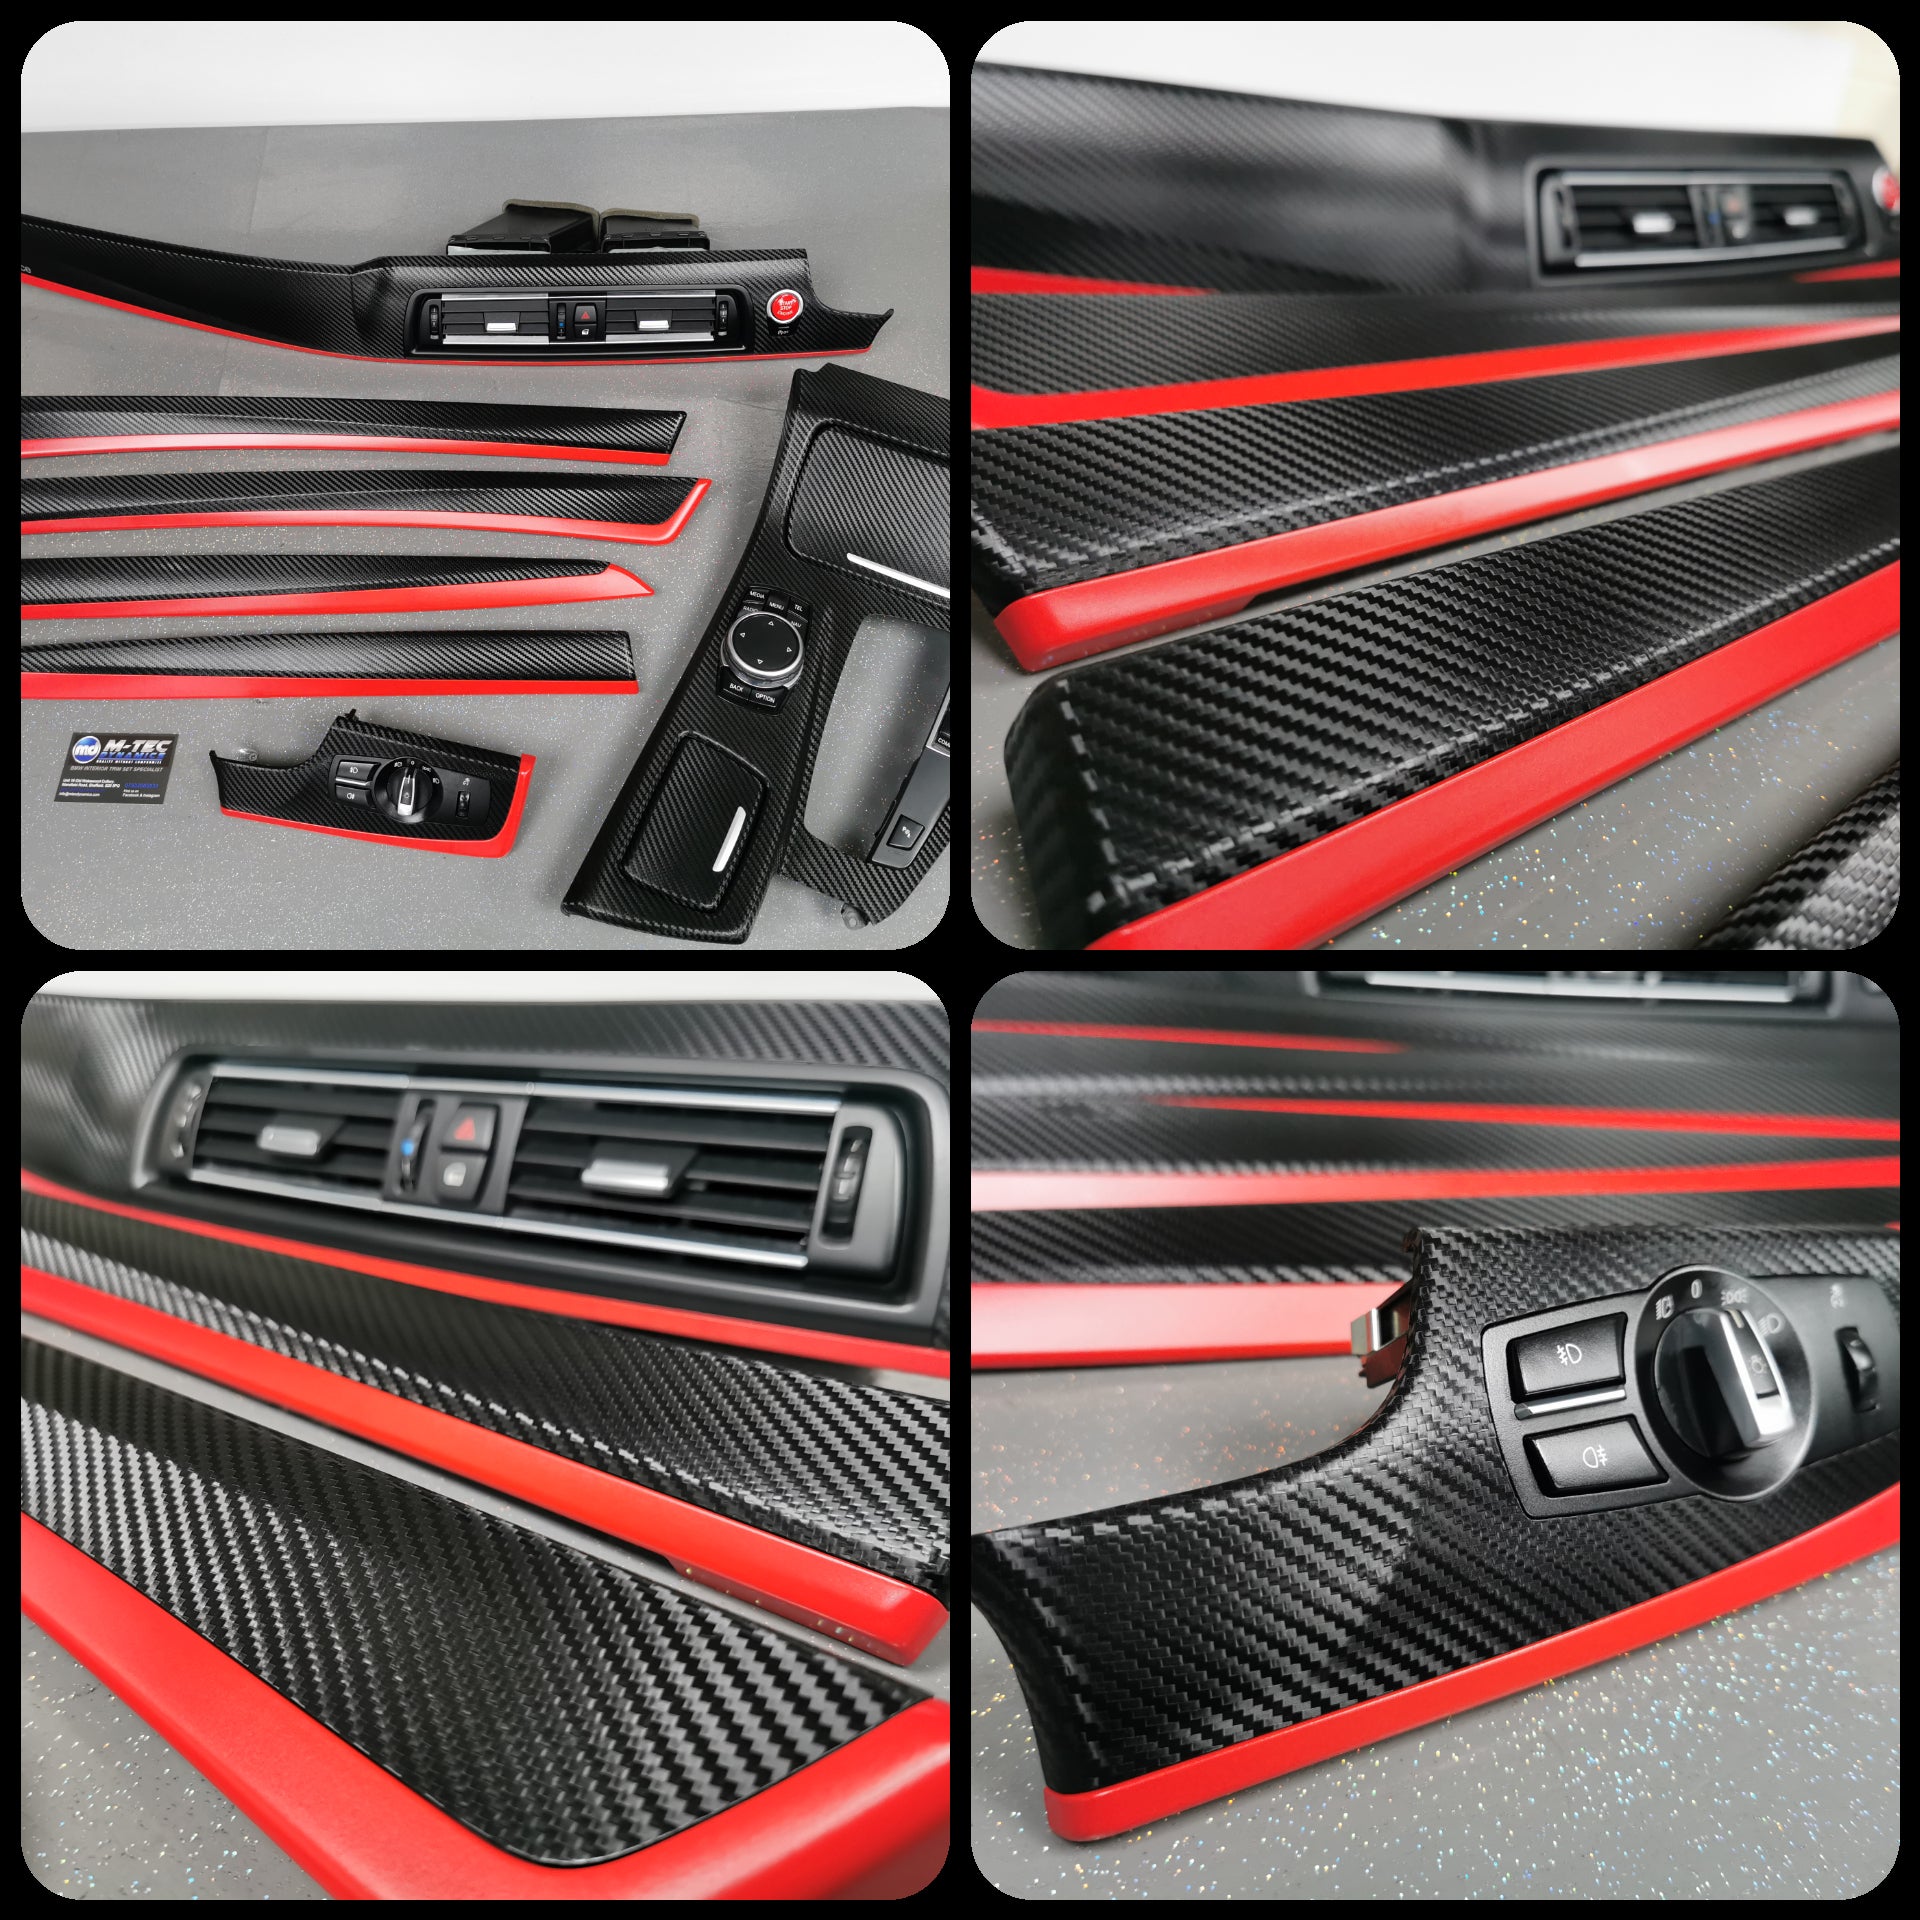 BMW F10 F11 AUTO INTERIOR TRIM SET - DEEP TEXTURED GLOSSY BLACK CARBON / RED ACCENT (MTD-TEX)